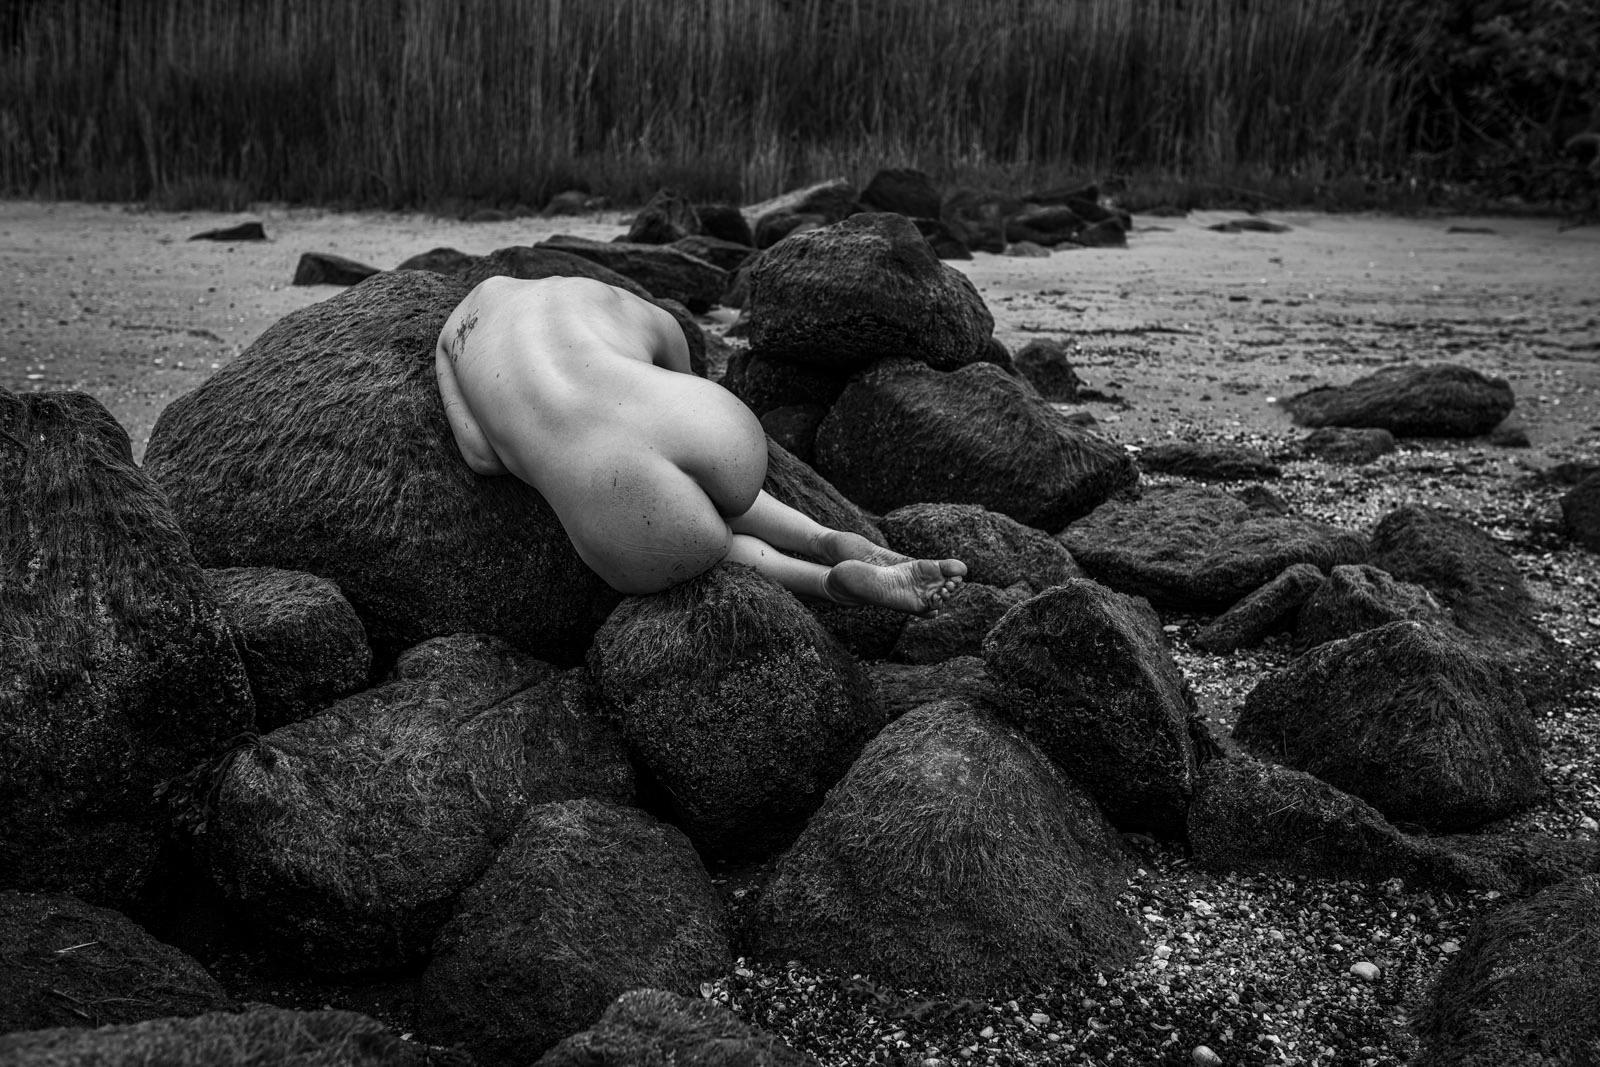 John Mazlish Black and White Photograph - "Body Rocks B&W"- Fine Art Nude Photo in Nature